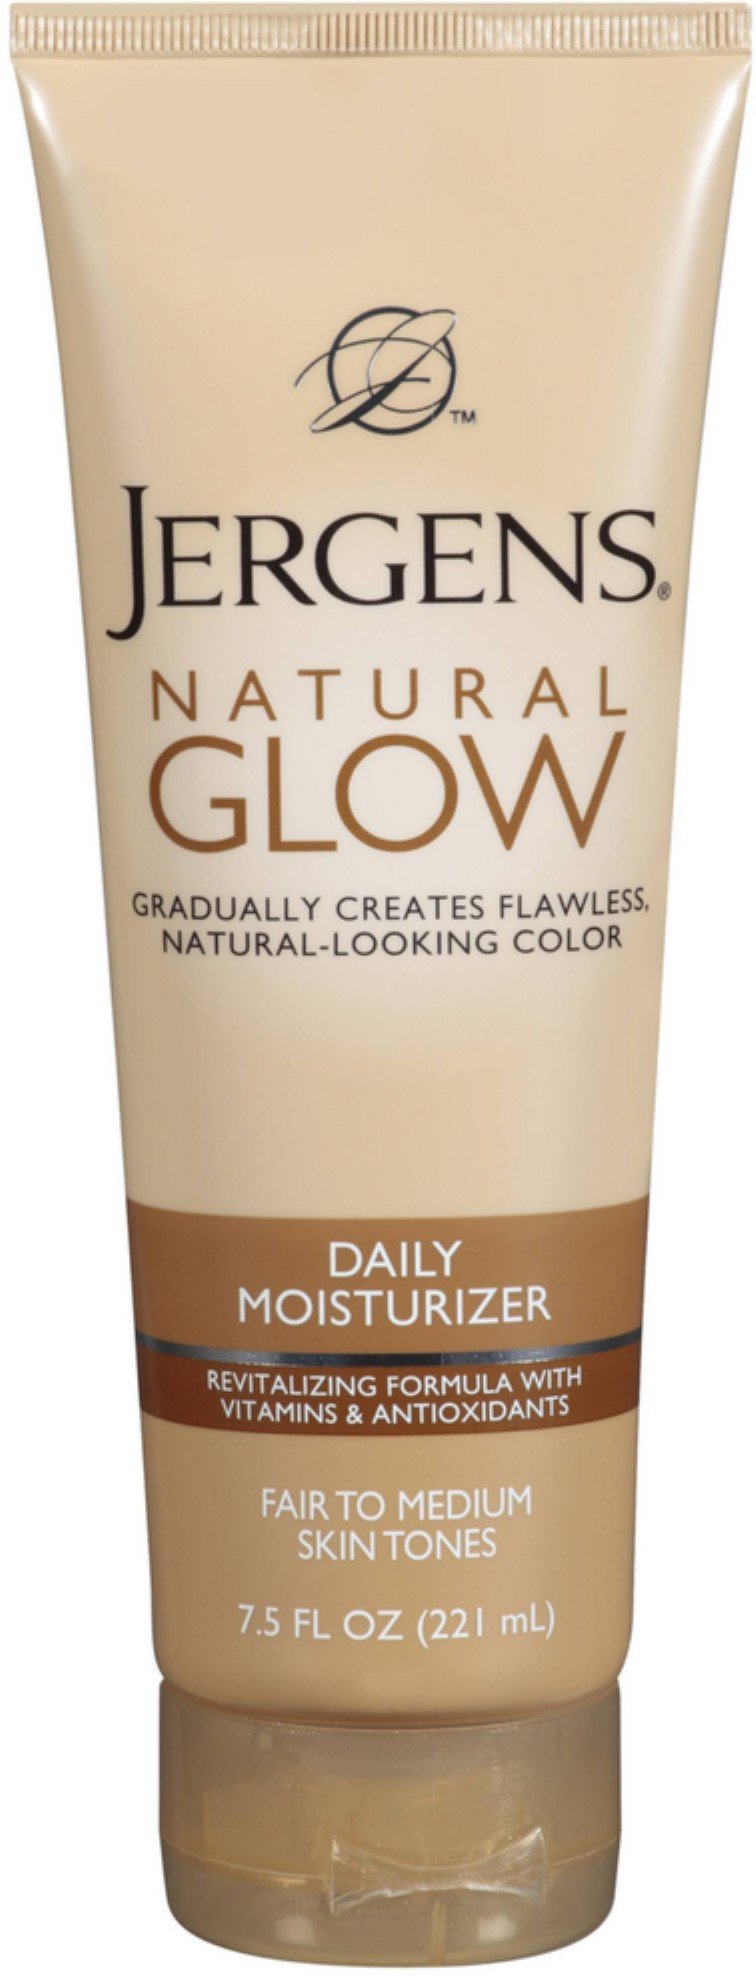 Jergens Daily Moisturizer Fair To Medium Skin Natural Glow, 7.5oz, 4-Pack - image 1 of 3